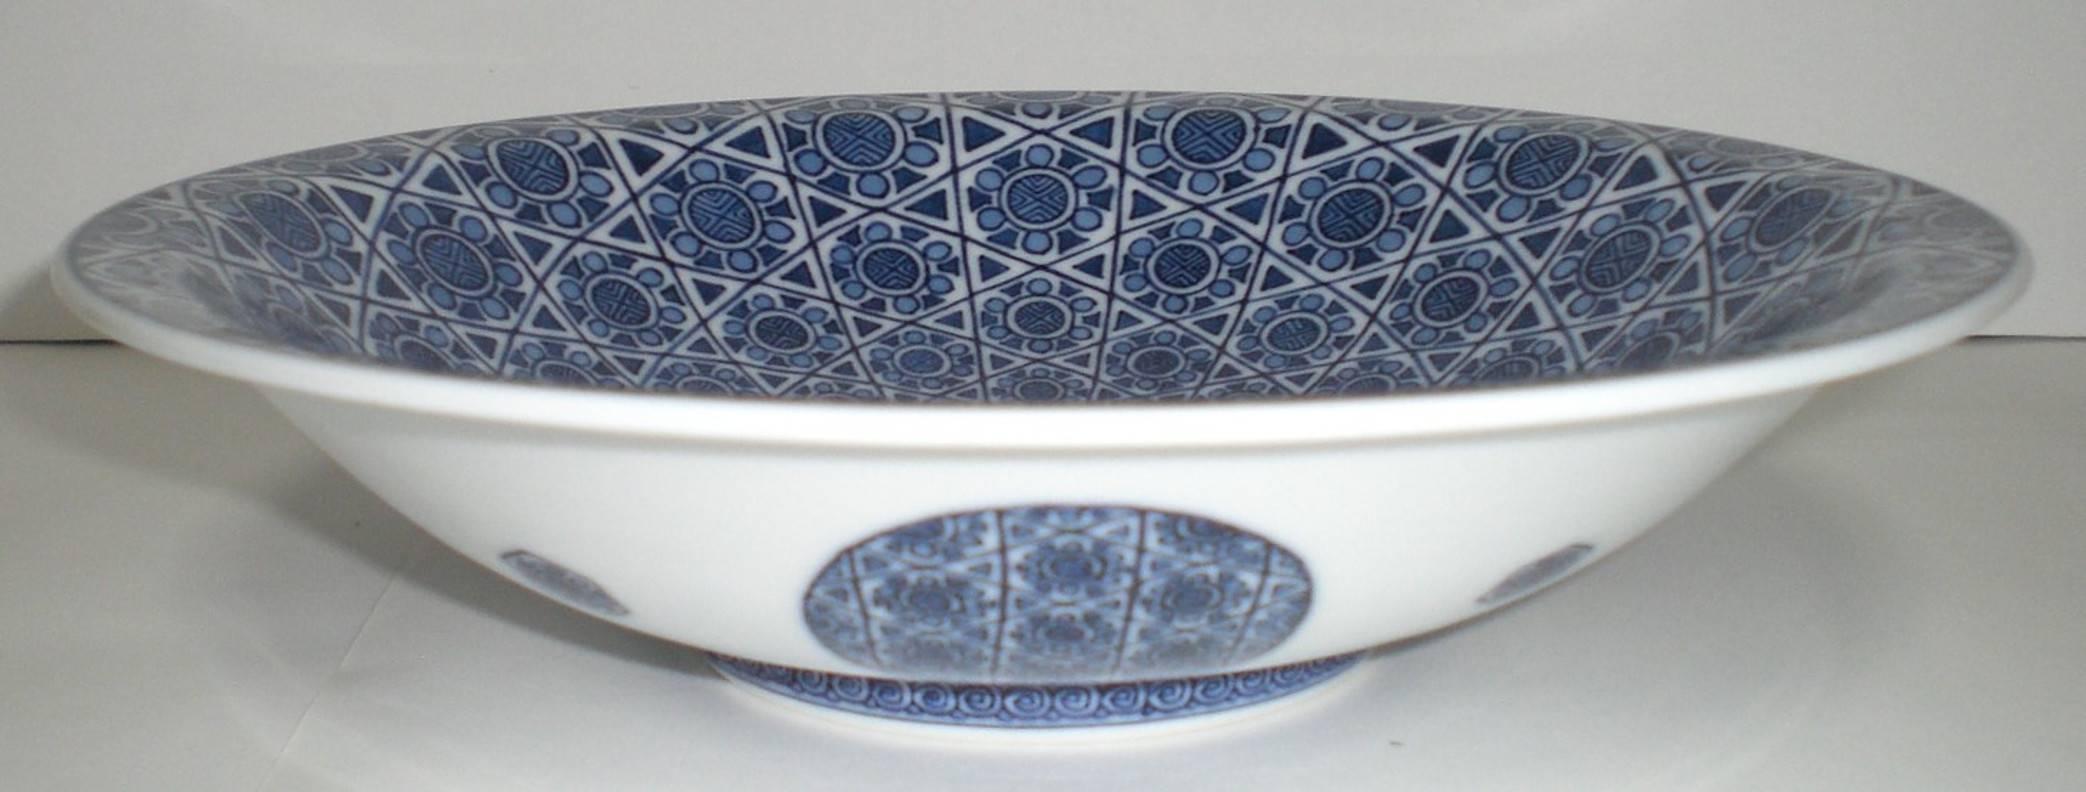 Porcelain Hand-Painted Decorative Platter by Japanese Master Artist